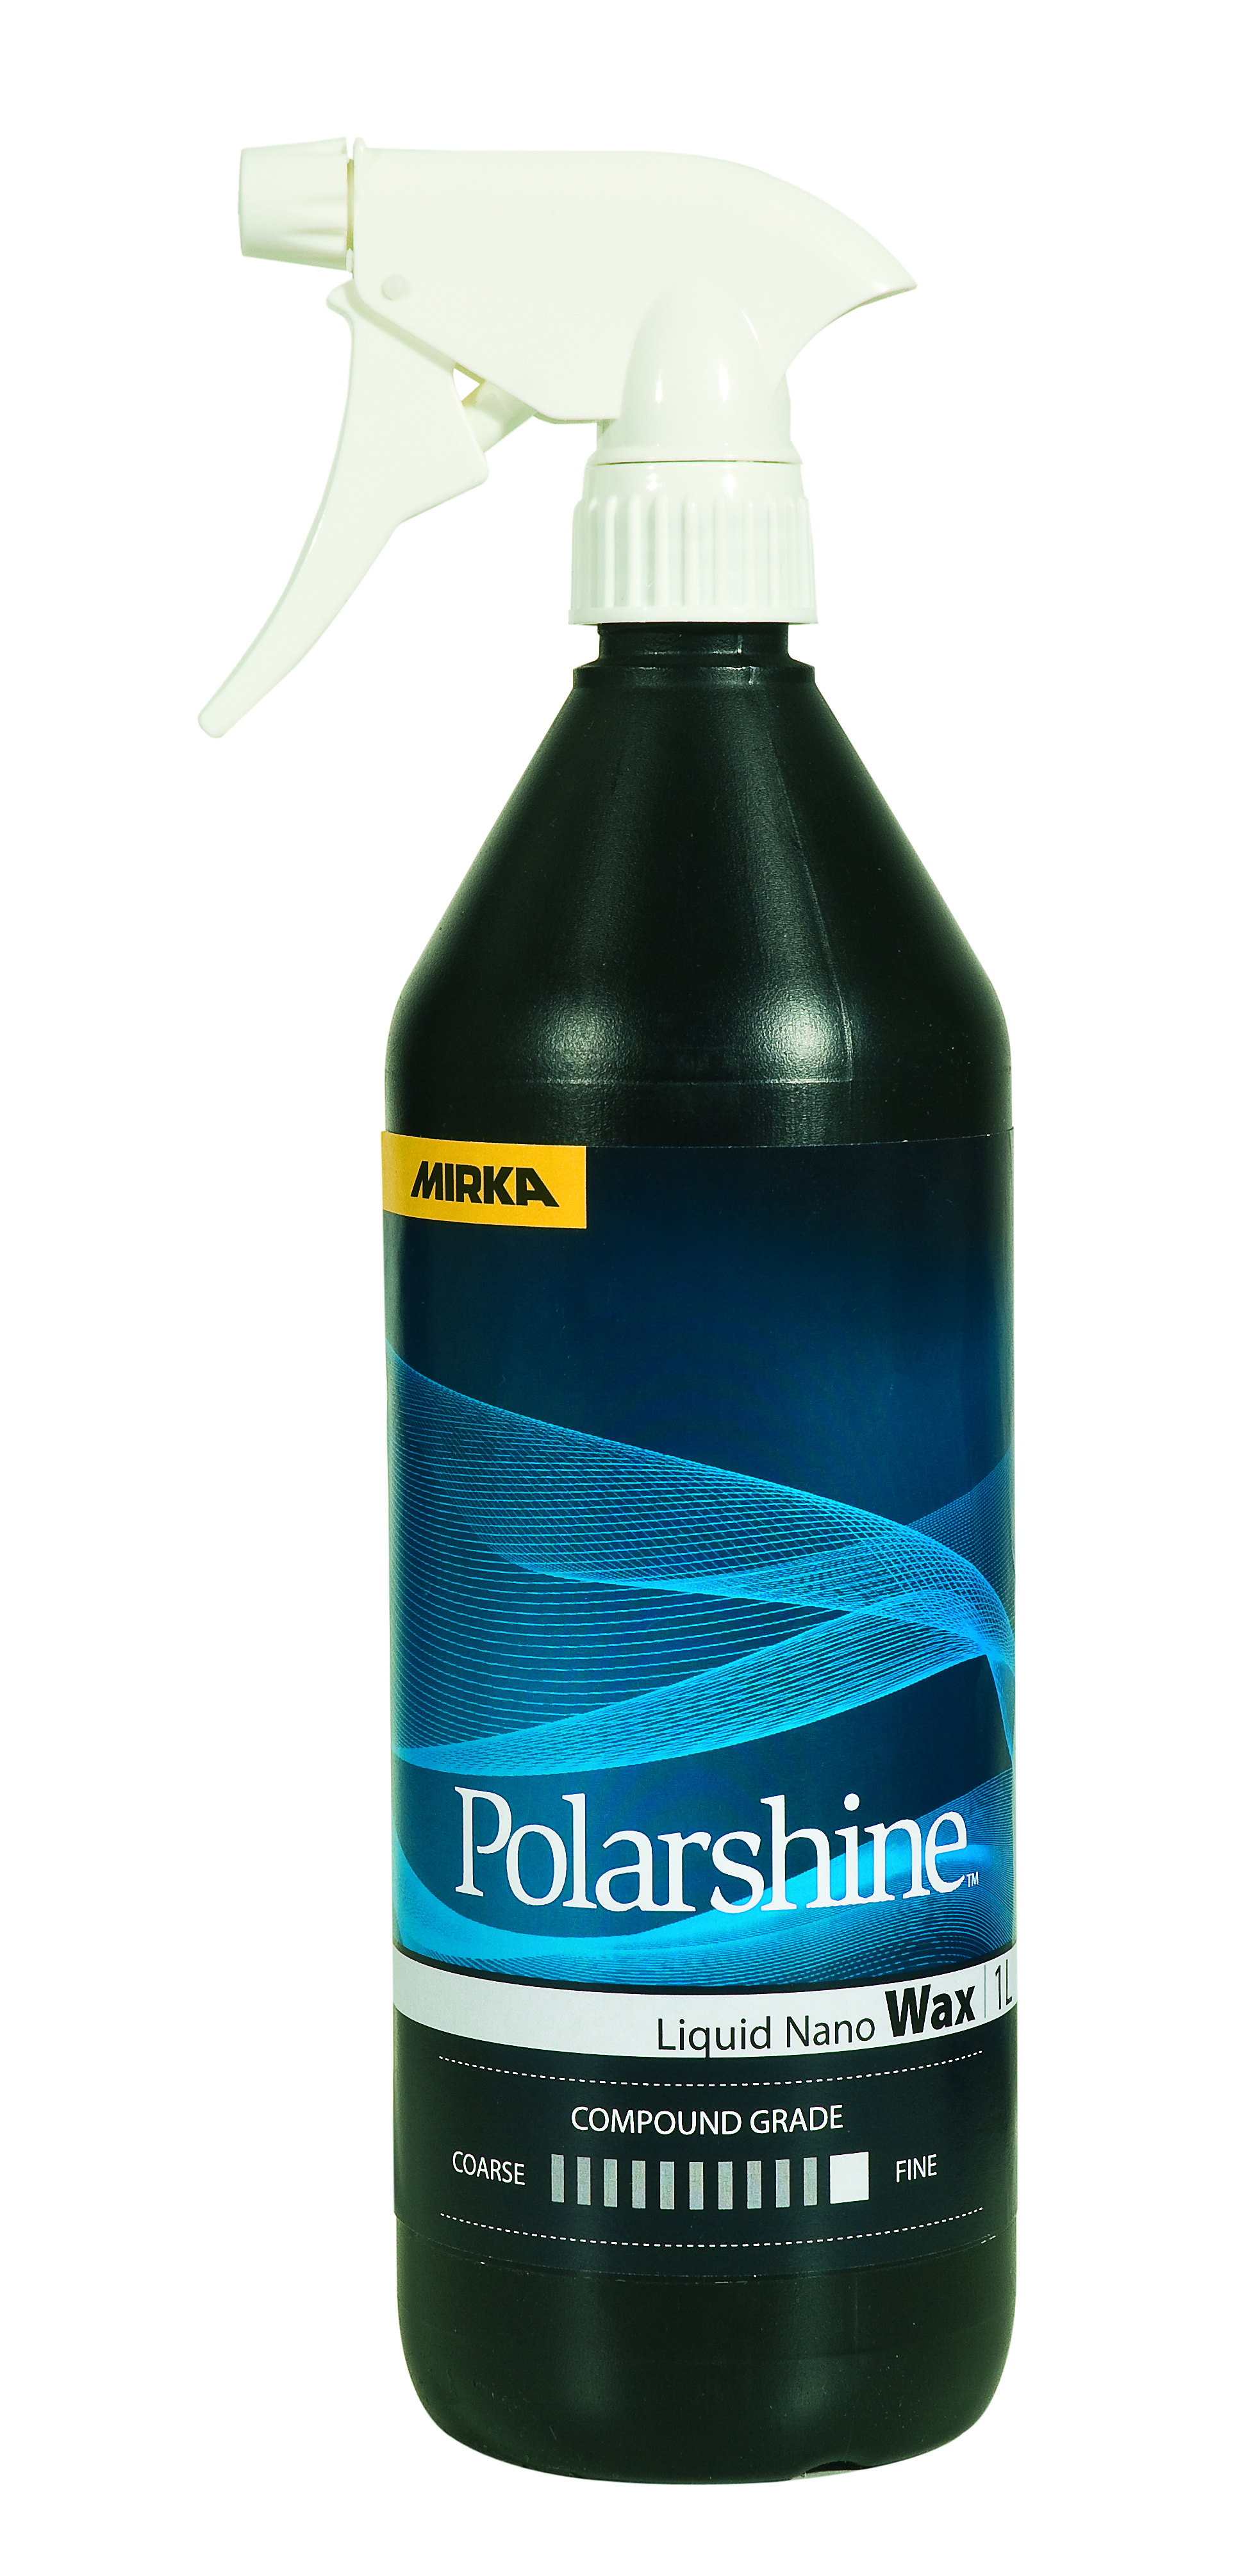 Polarshine liquid nano wax – 1l